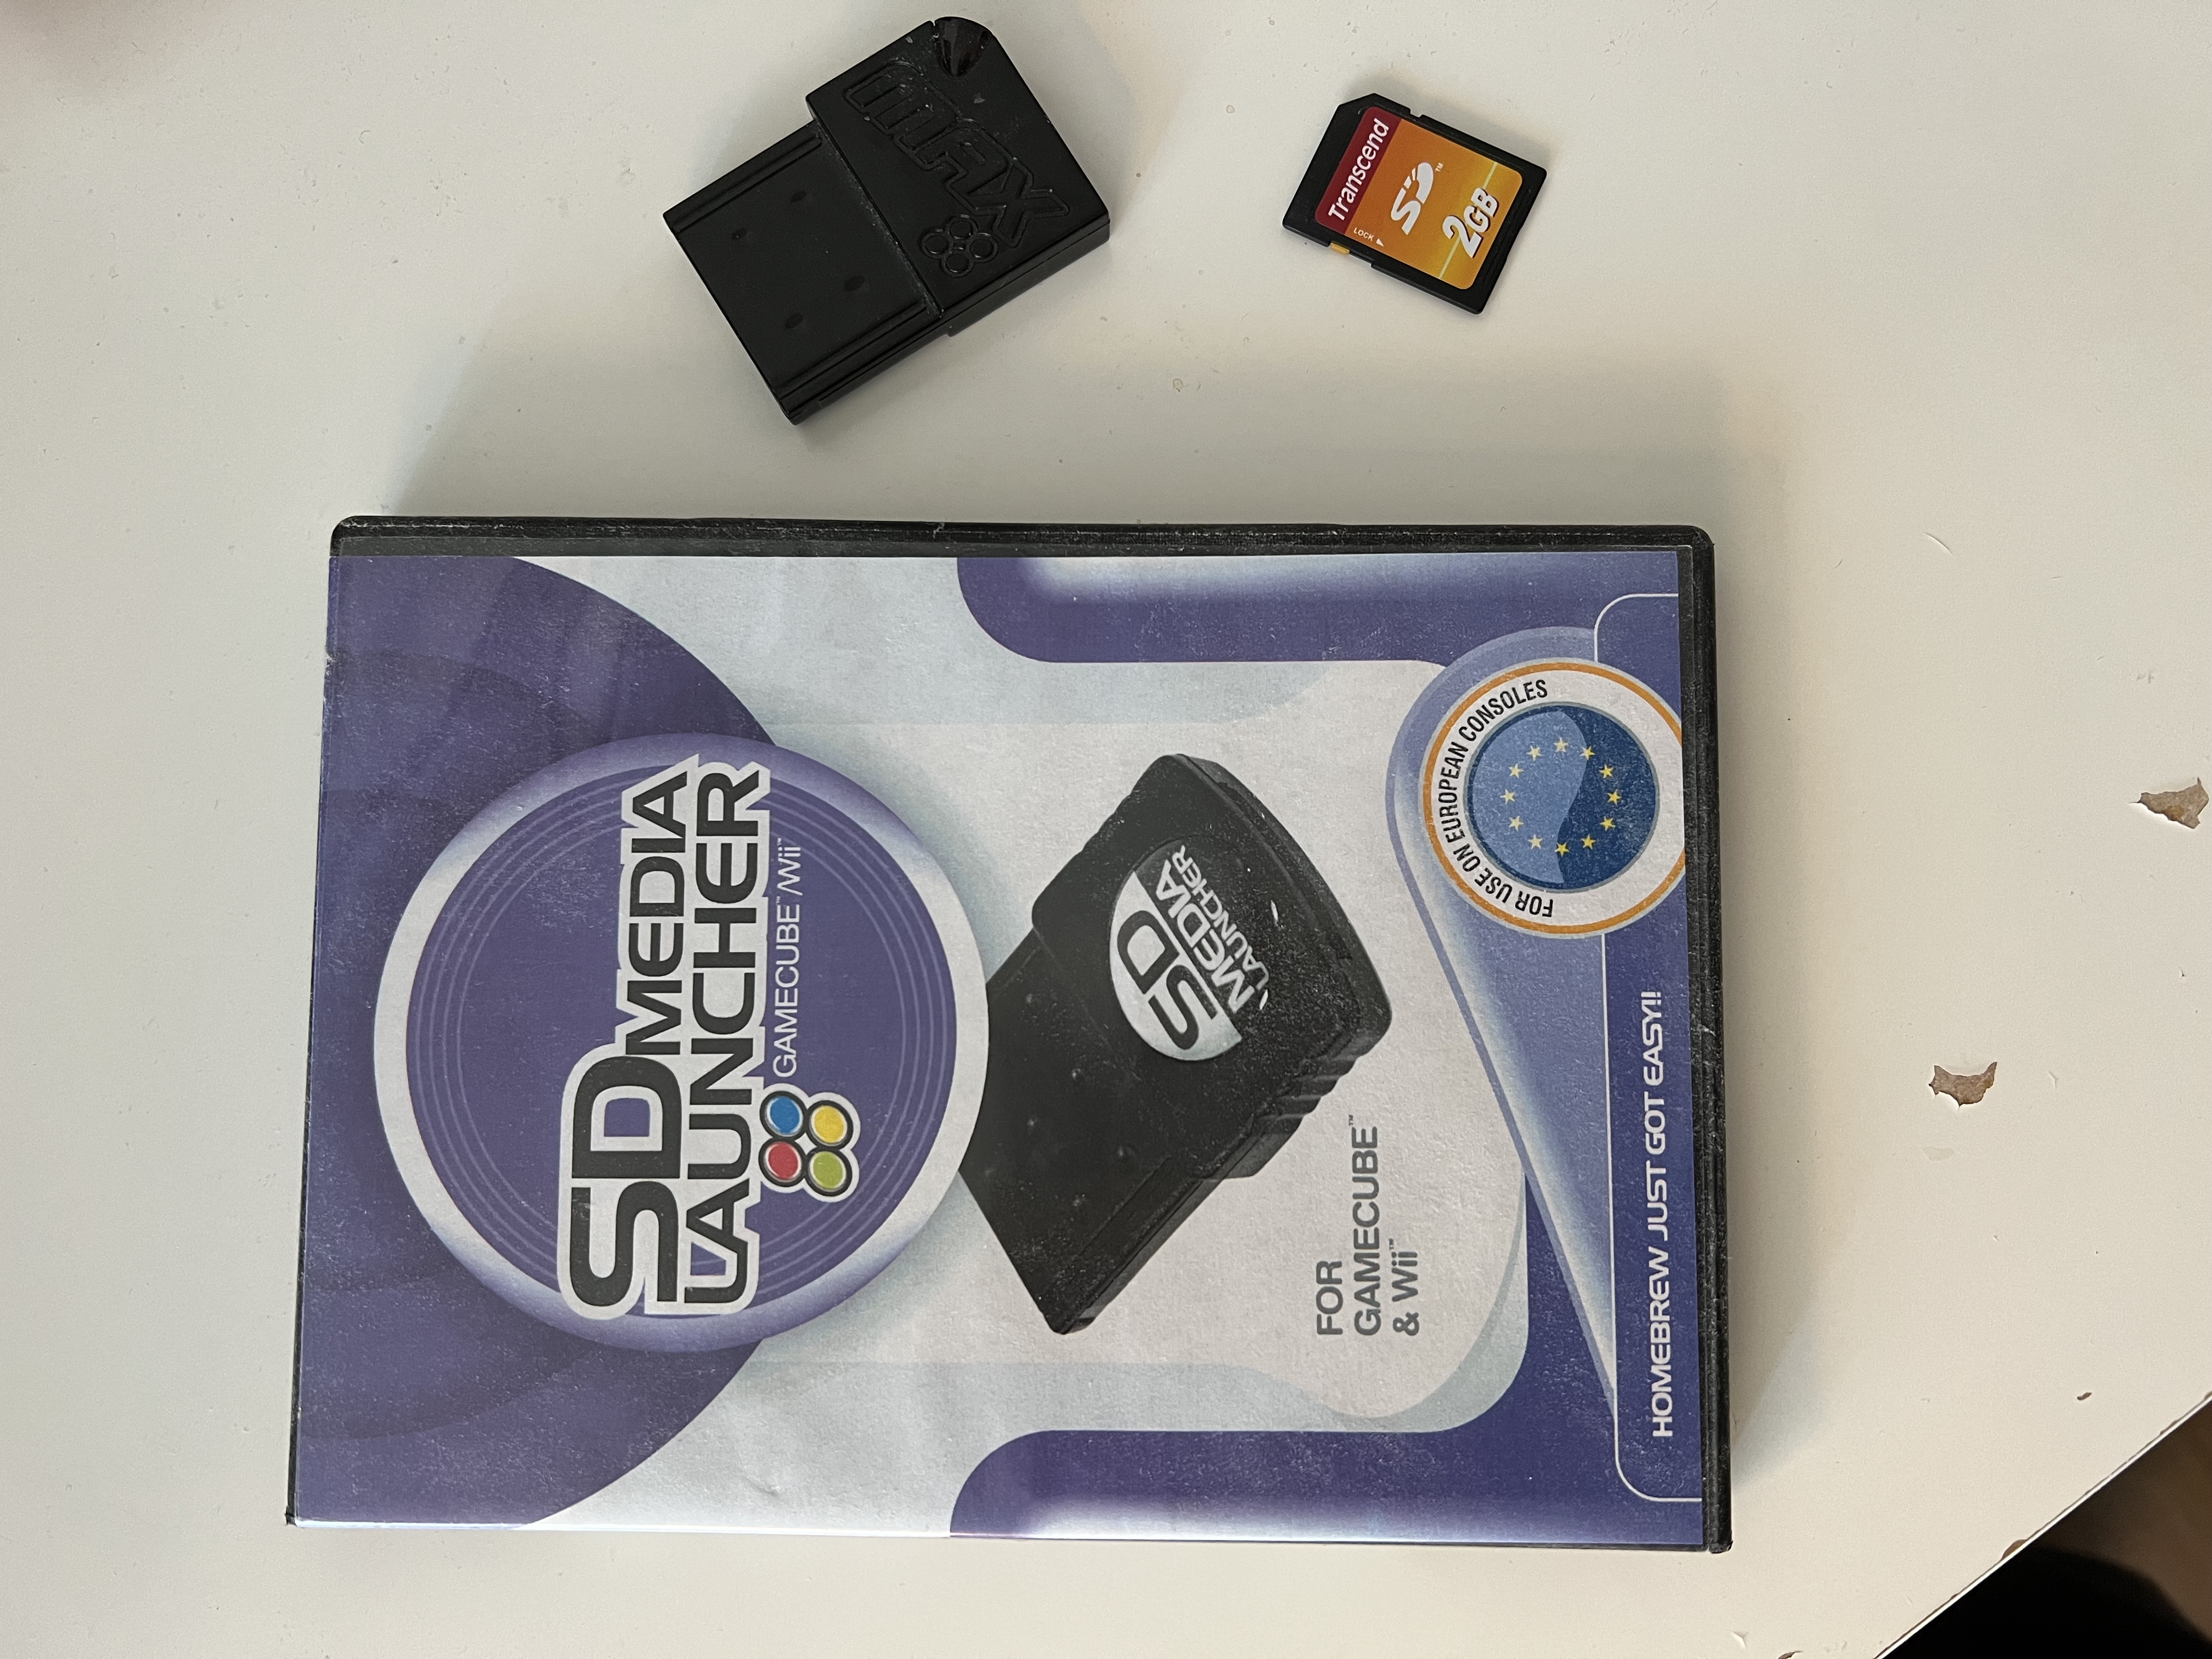 SD Media Launcher - the way I run homebrew on my GameCube